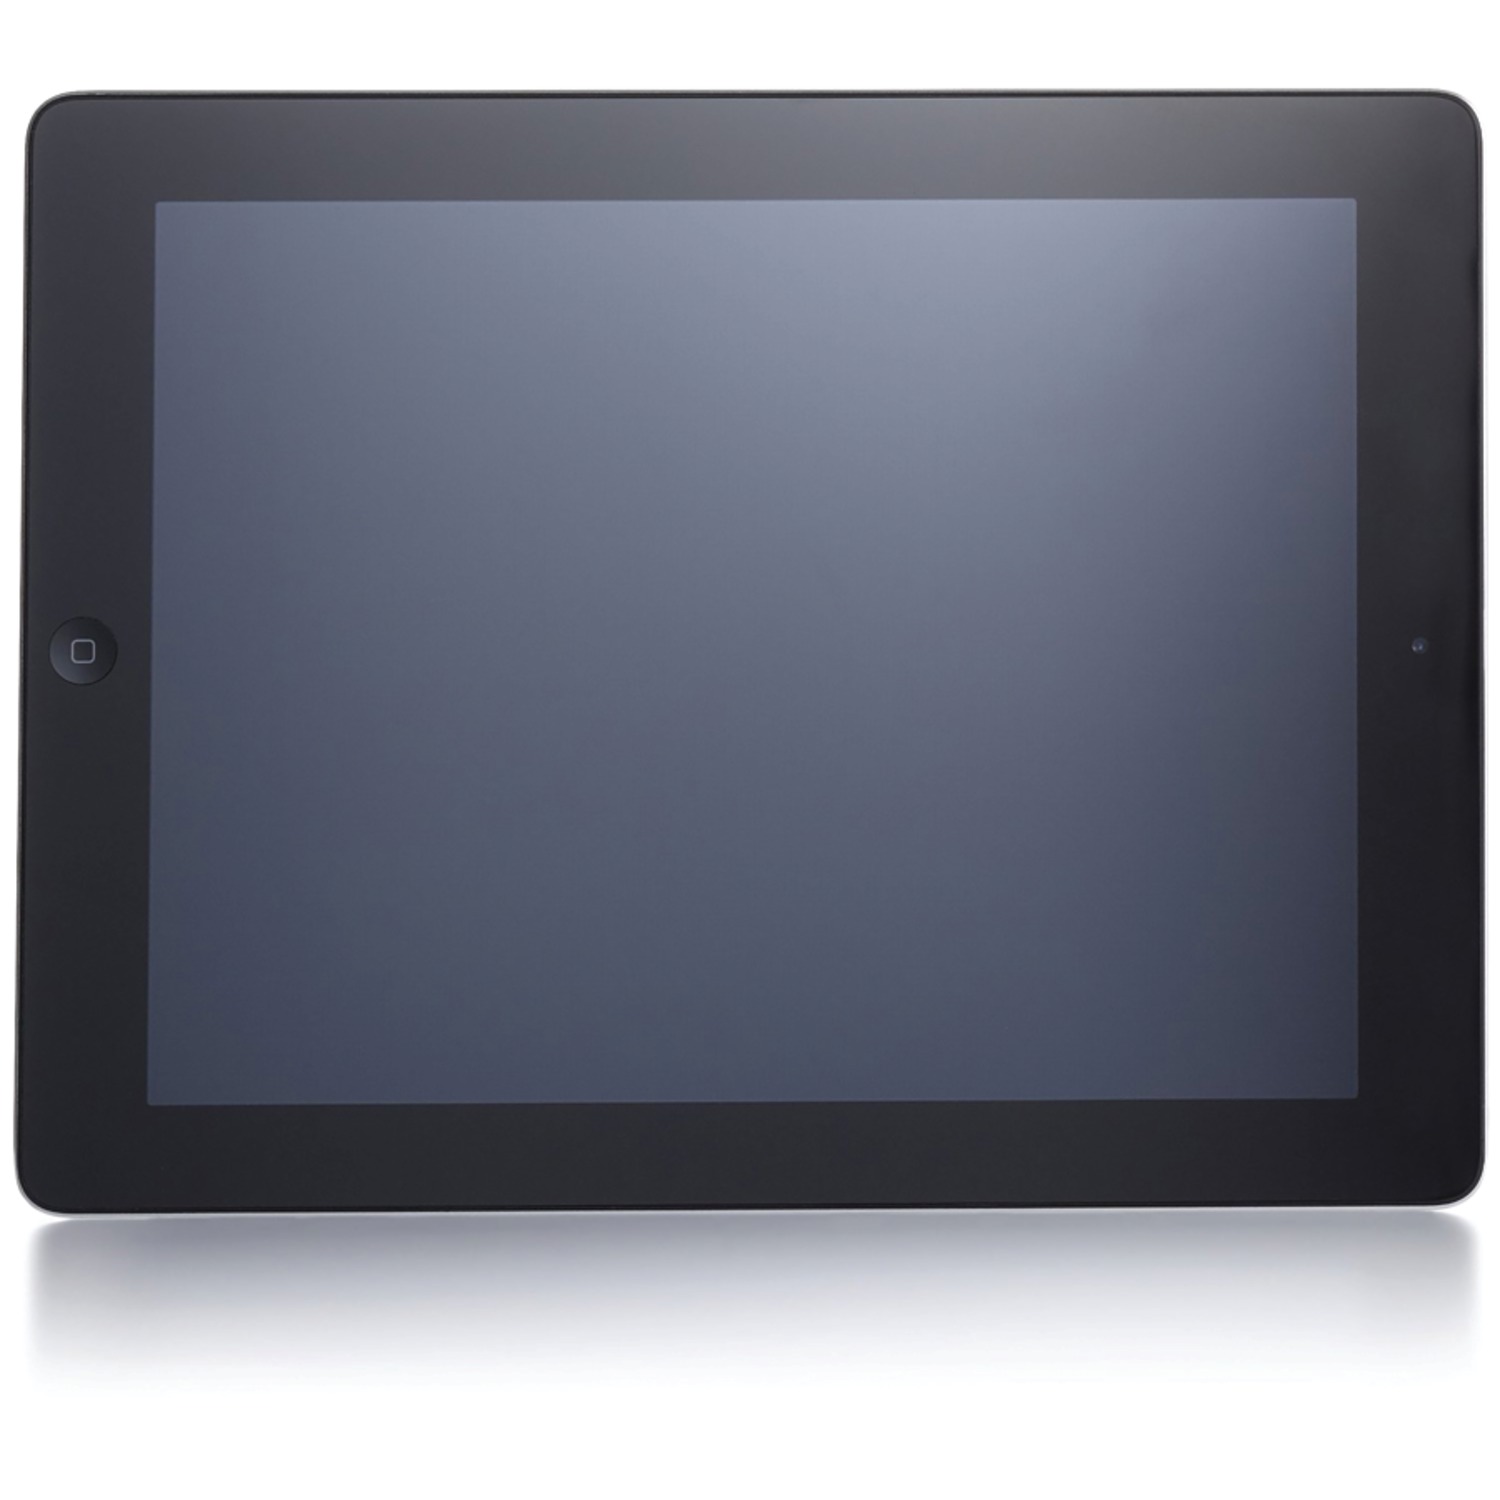 Restored MP2 - Apple iPad 2 with Wi-Fi 16GB - Black (2nd generation) MC769 (Refurbished) - image 3 of 4